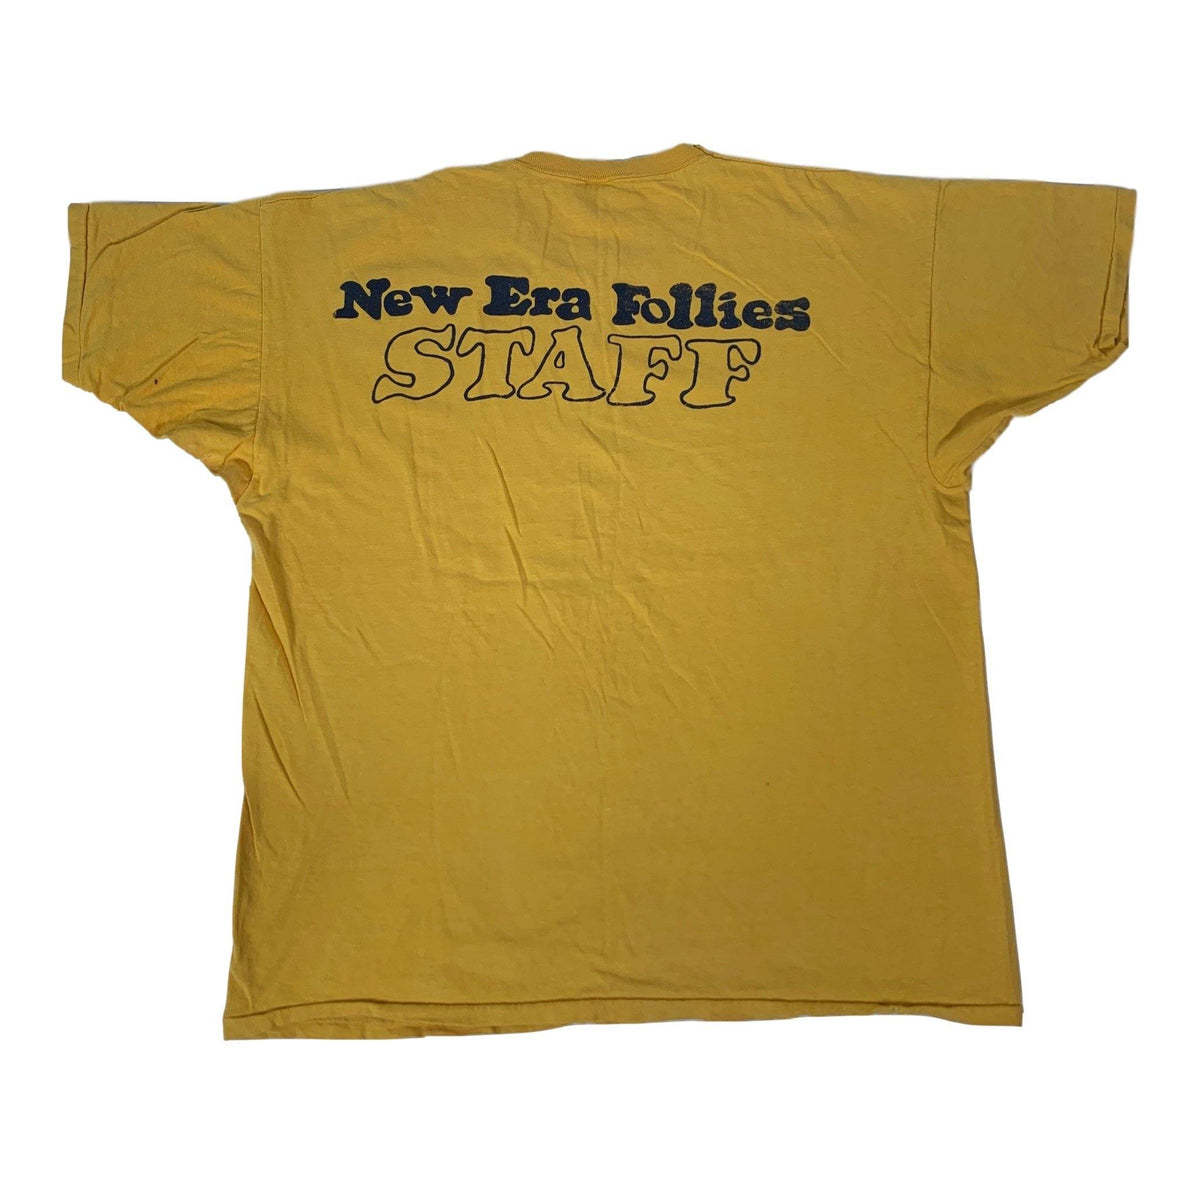 Vintage New Era Follies &quot;Staff&quot; T-Shirt - jointcustodydc